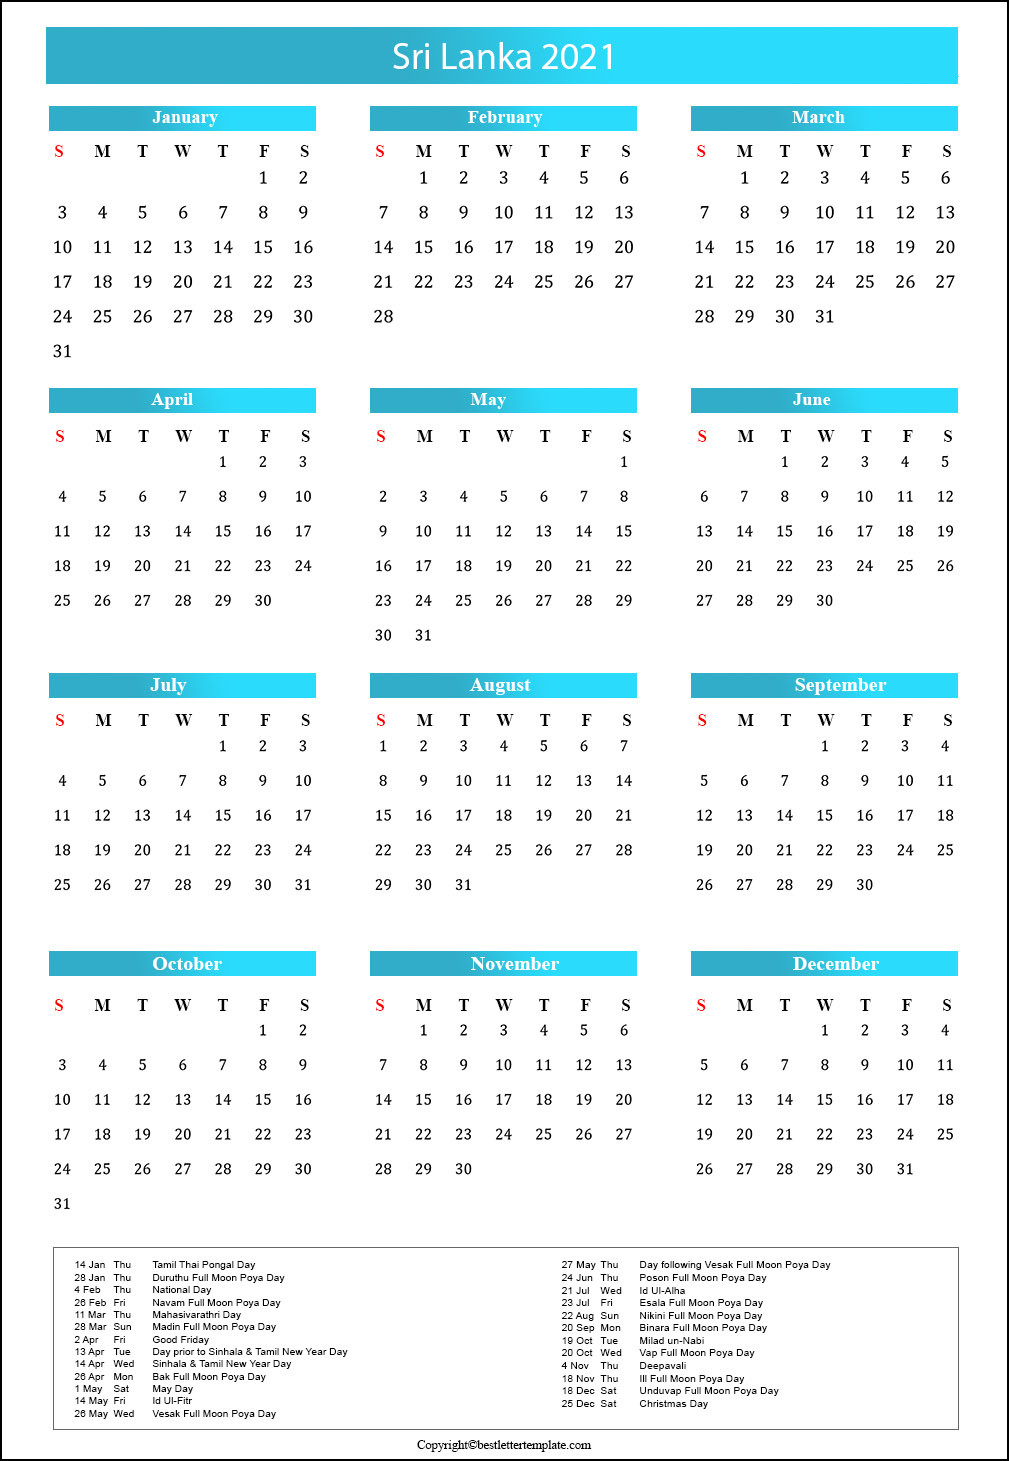 Free Printable Sri Lanka Calendar 2021 With Public Holidays-Mercantile Holiday Calendar 2021 Sri Lanka